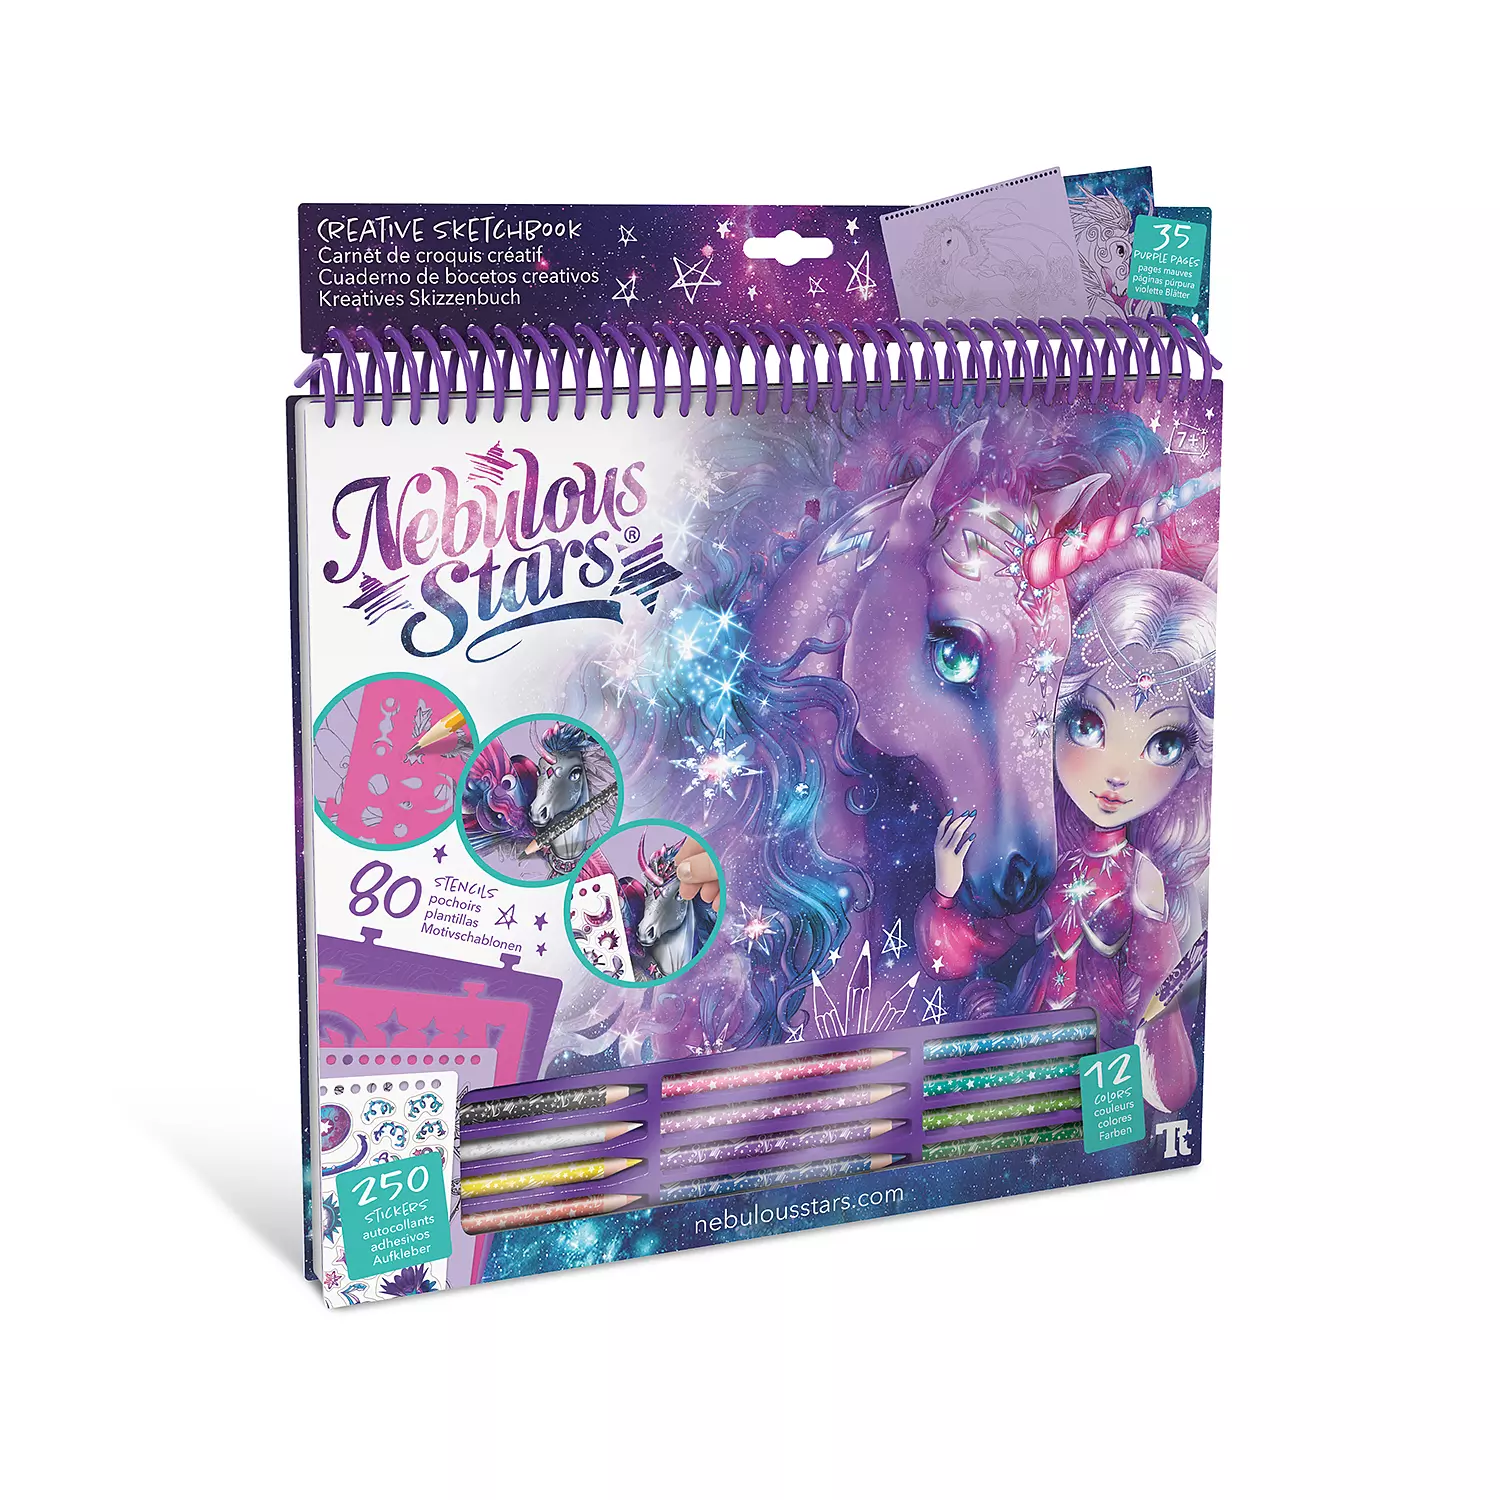 Nebulous Stars - Creative sketchbook, fantasy horses